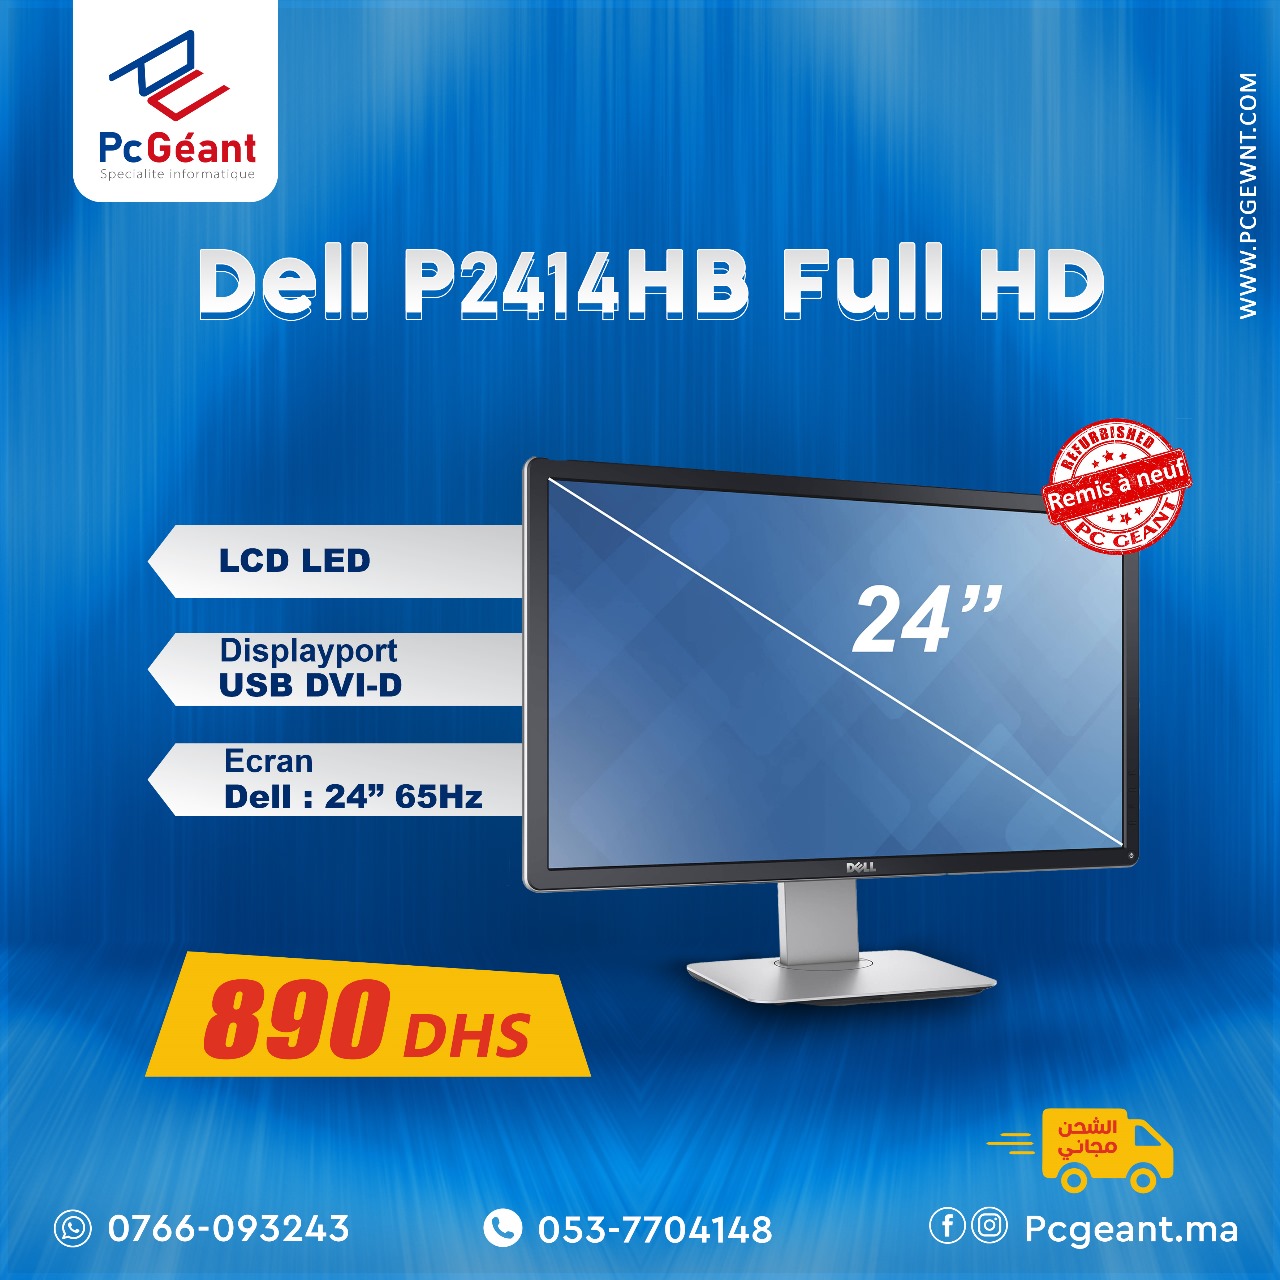 Ecran DELL 24″ LED WIDE P2414HB Full HD (1920×1080) – DELL – DVI + VGA – DP  – Remis à neuf – PC Geant